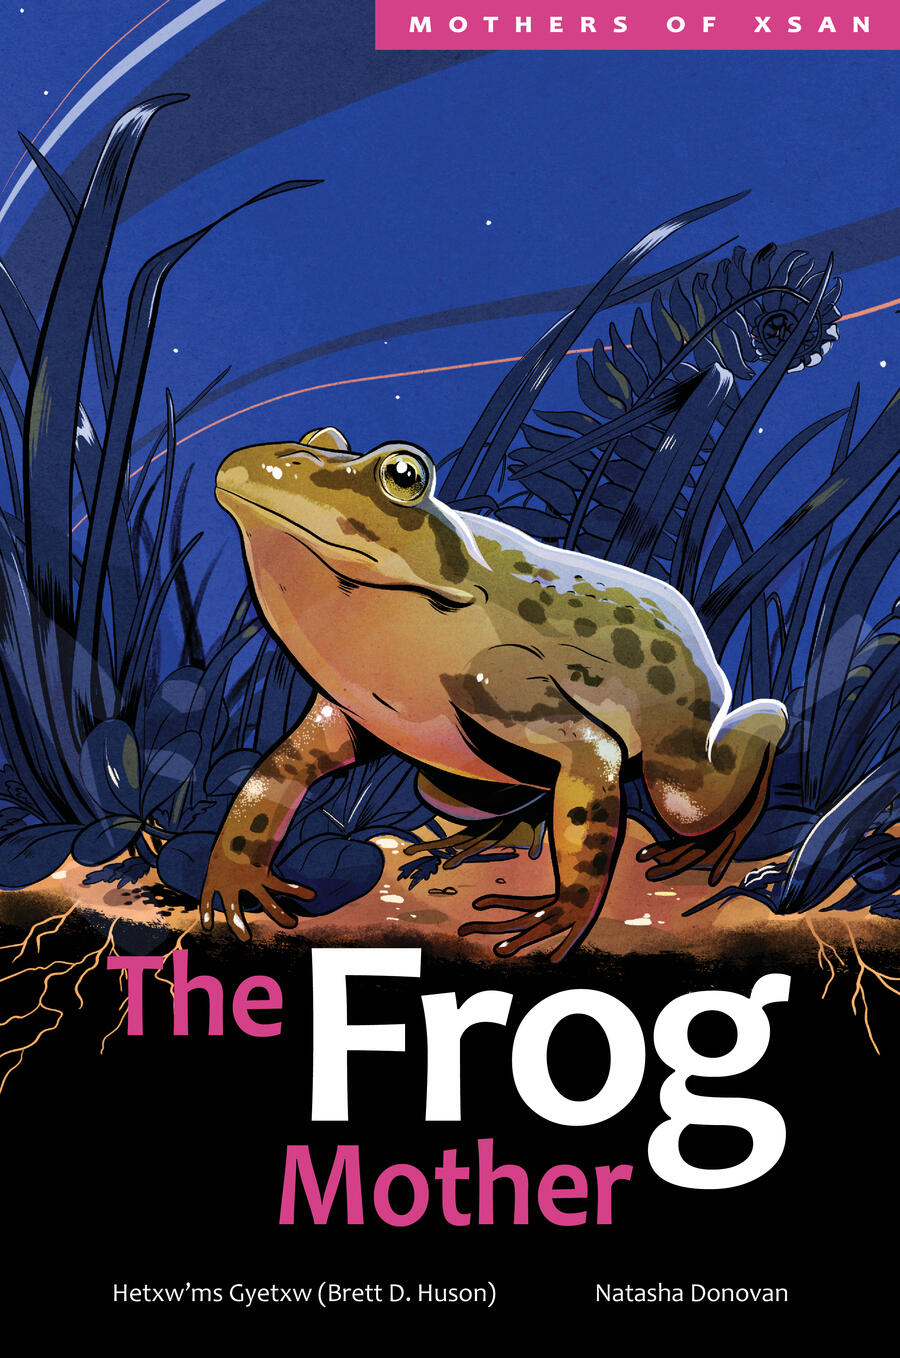 https://www.portageandmainpress.com/var/site/storage/images/books/t/the-frog-mother/image-front-cover/536316-1-eng-CA/Image-front-cover_rb_modalcover.jpg